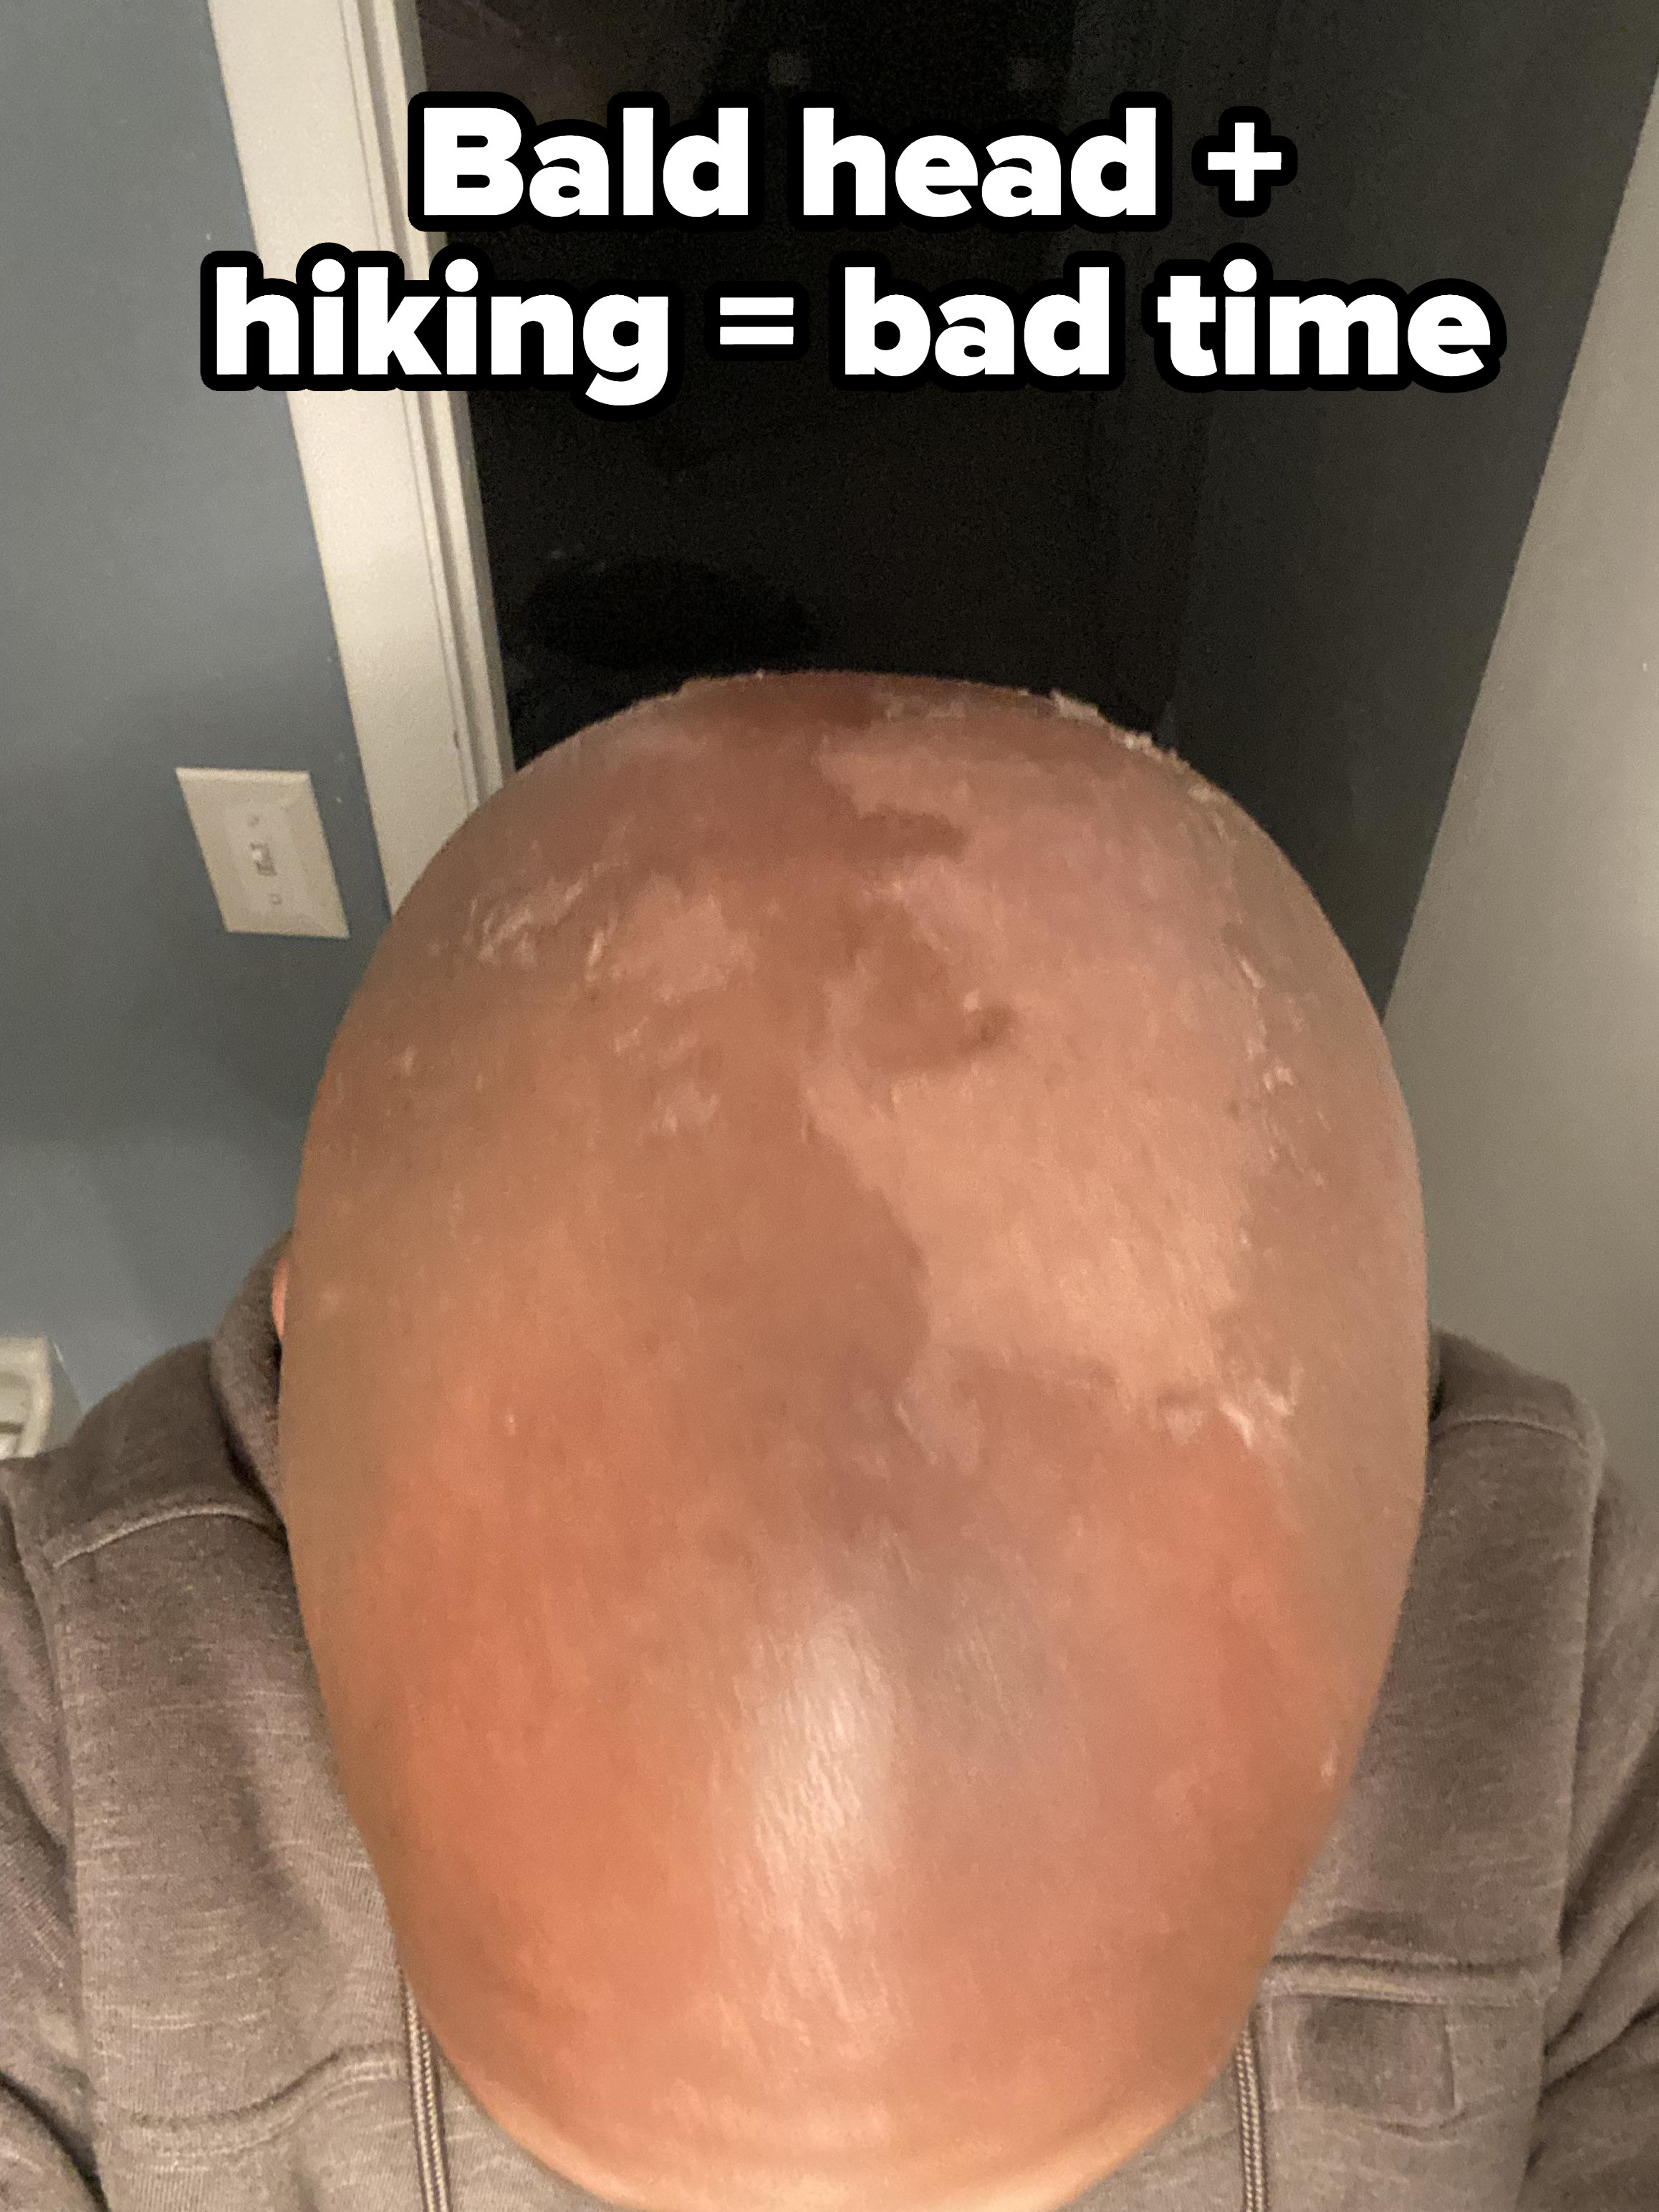 bald guy with sunburn on his head